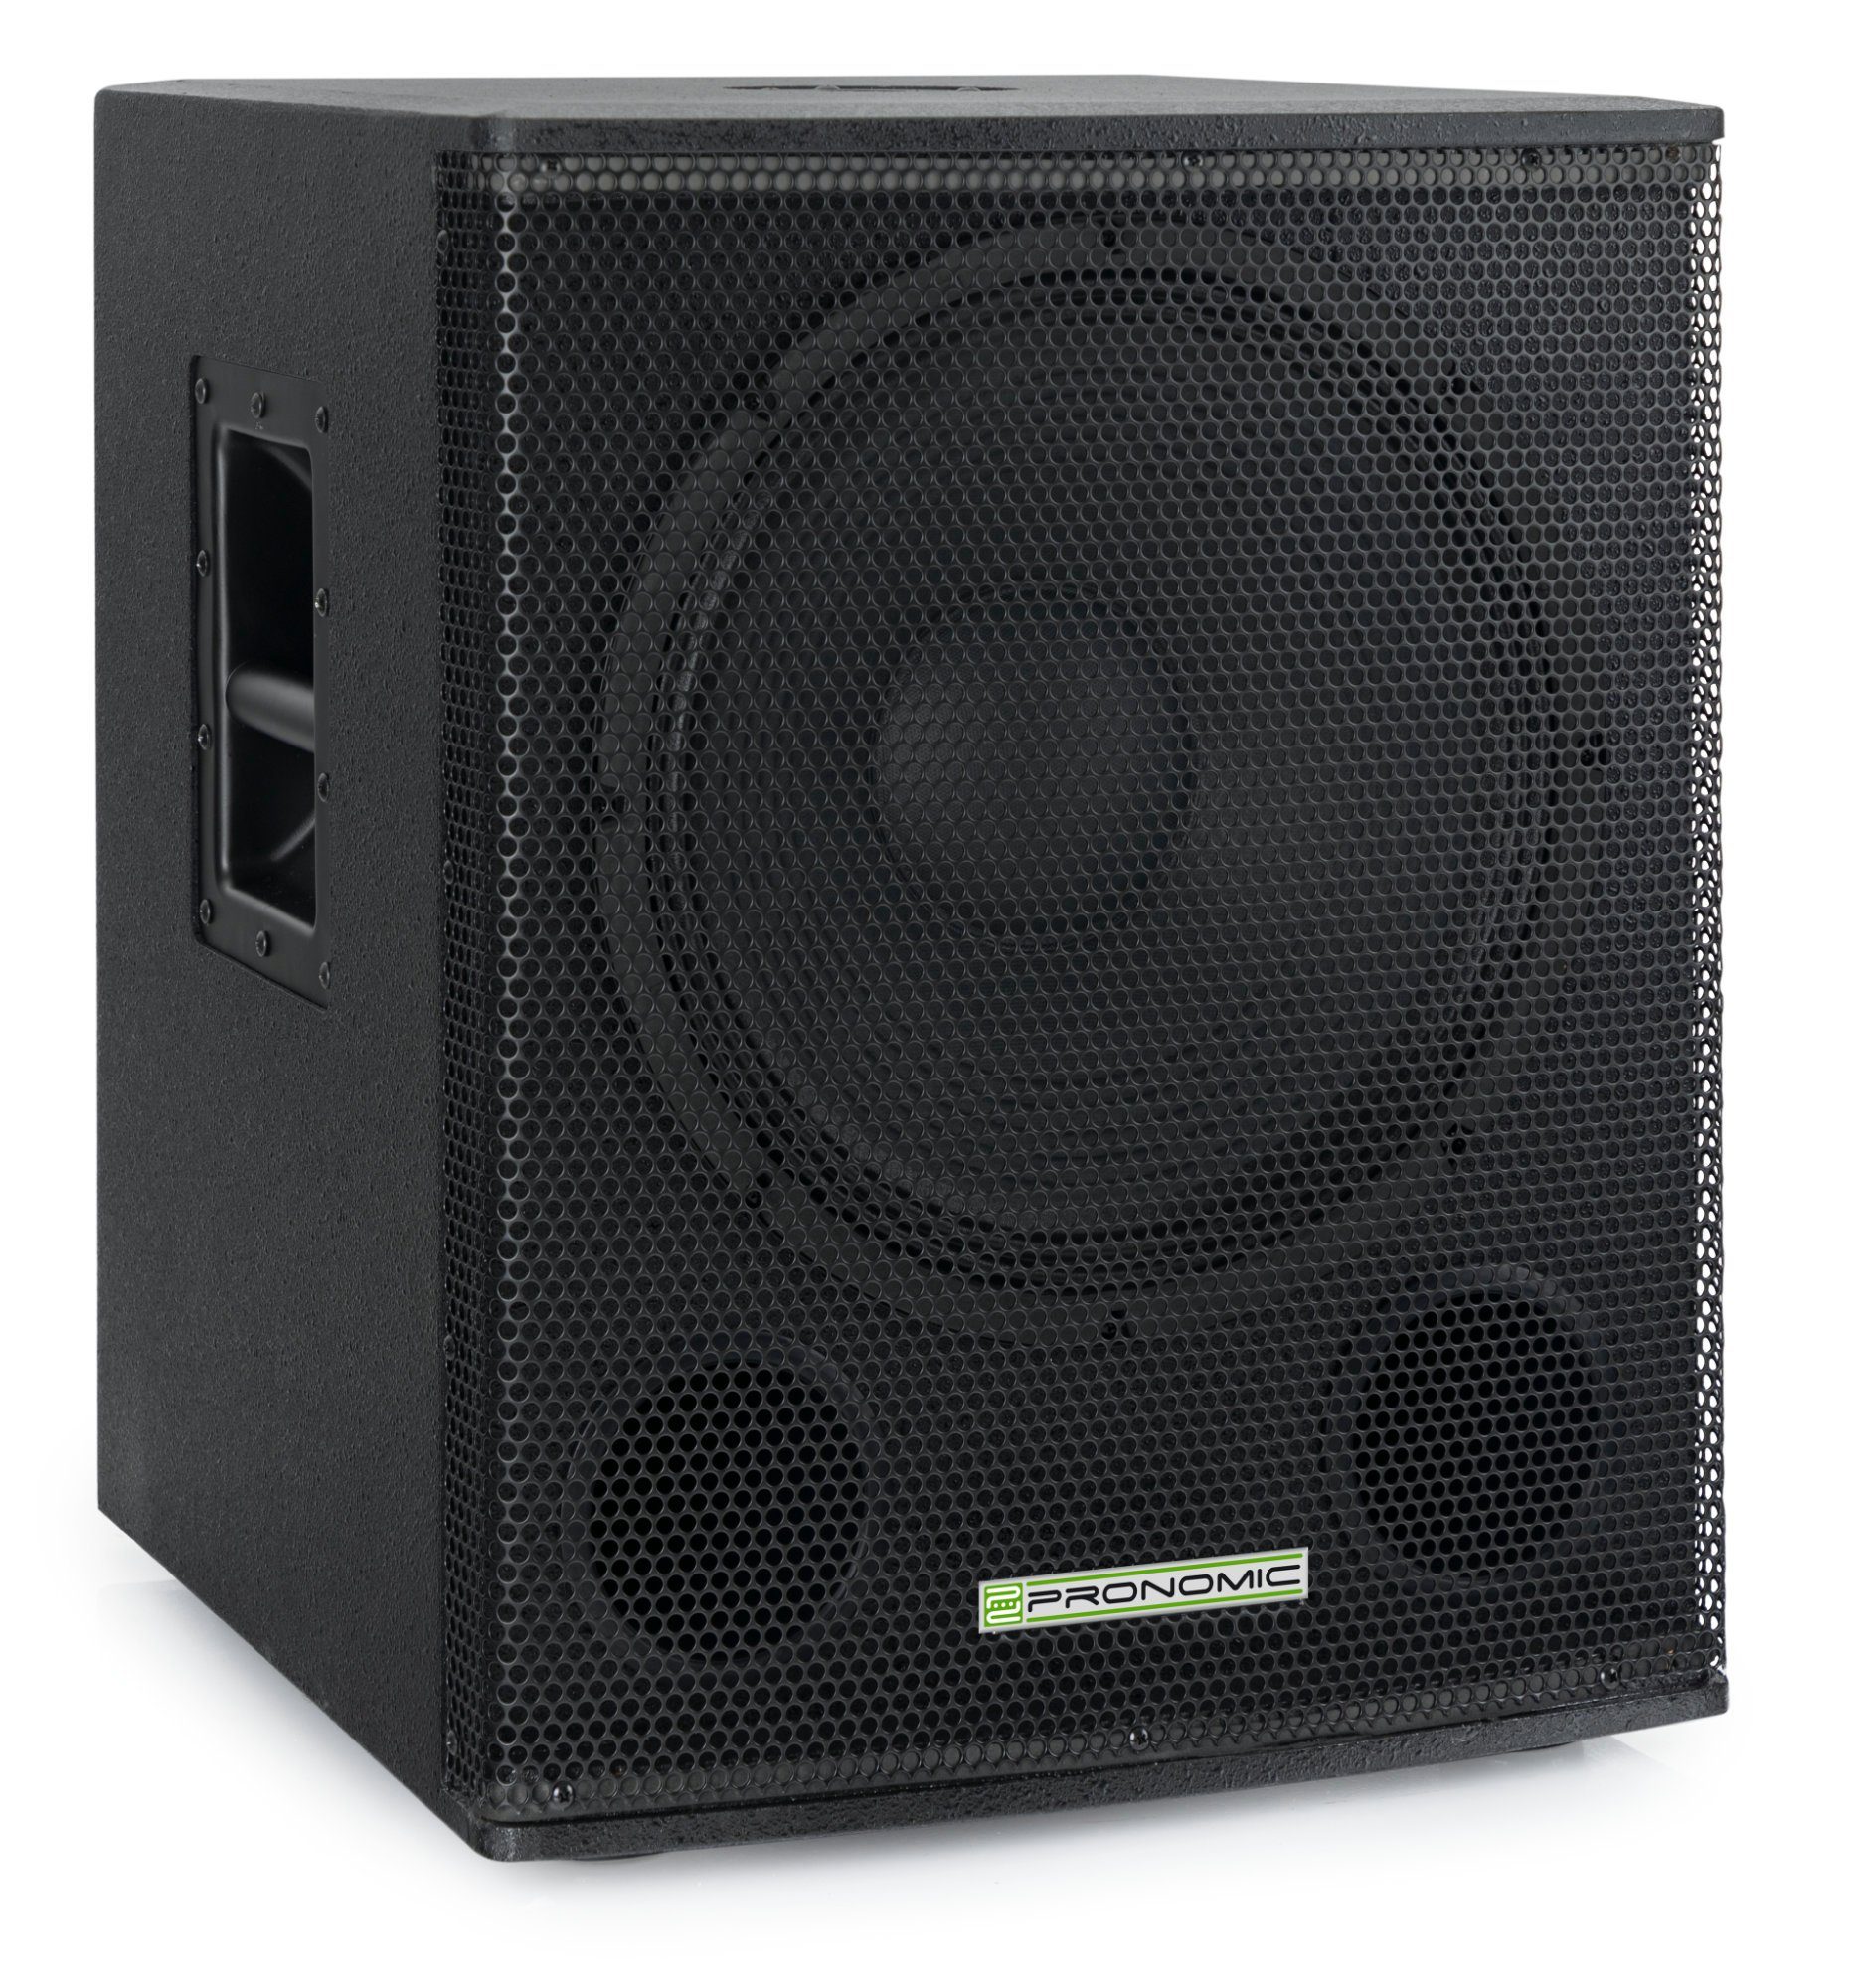 Pronomic SA-15 SUB Aktiv Сабуфери - 1x 15" Speaker mit Bassreflex-Öffnungen Сабуфери (700 W, max. SPL: 128 dB - 35mm-Flansch)